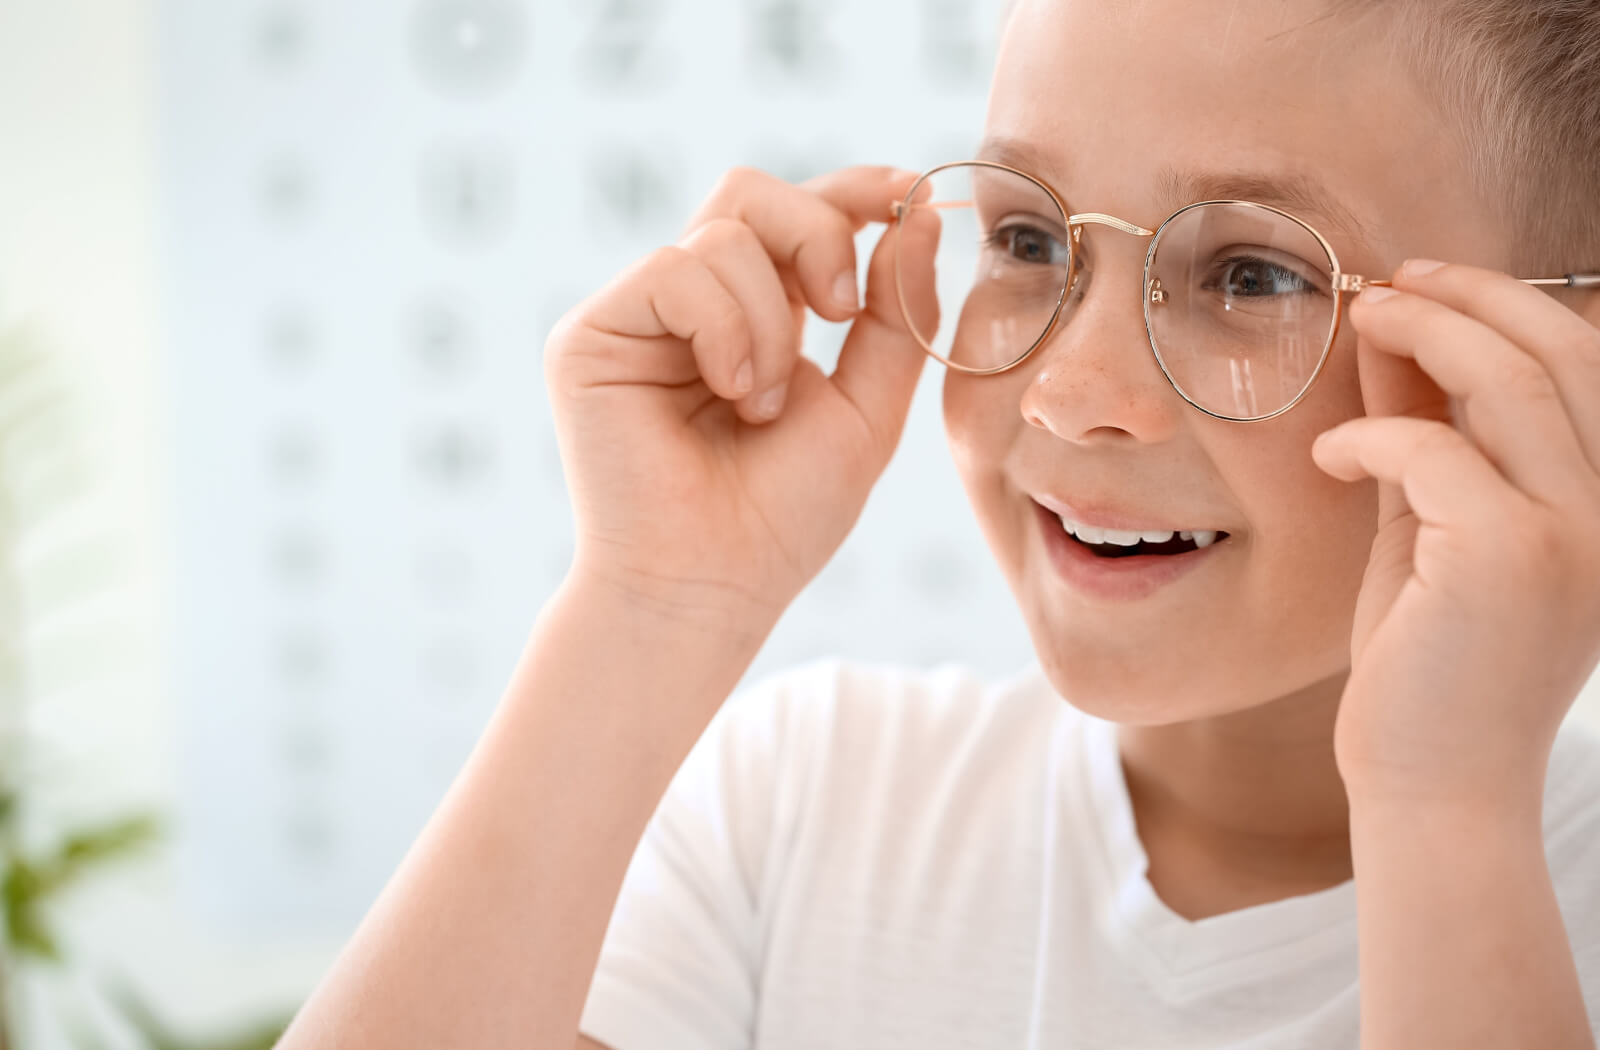 A young boy with myopia gets his corrective eyeglasses.